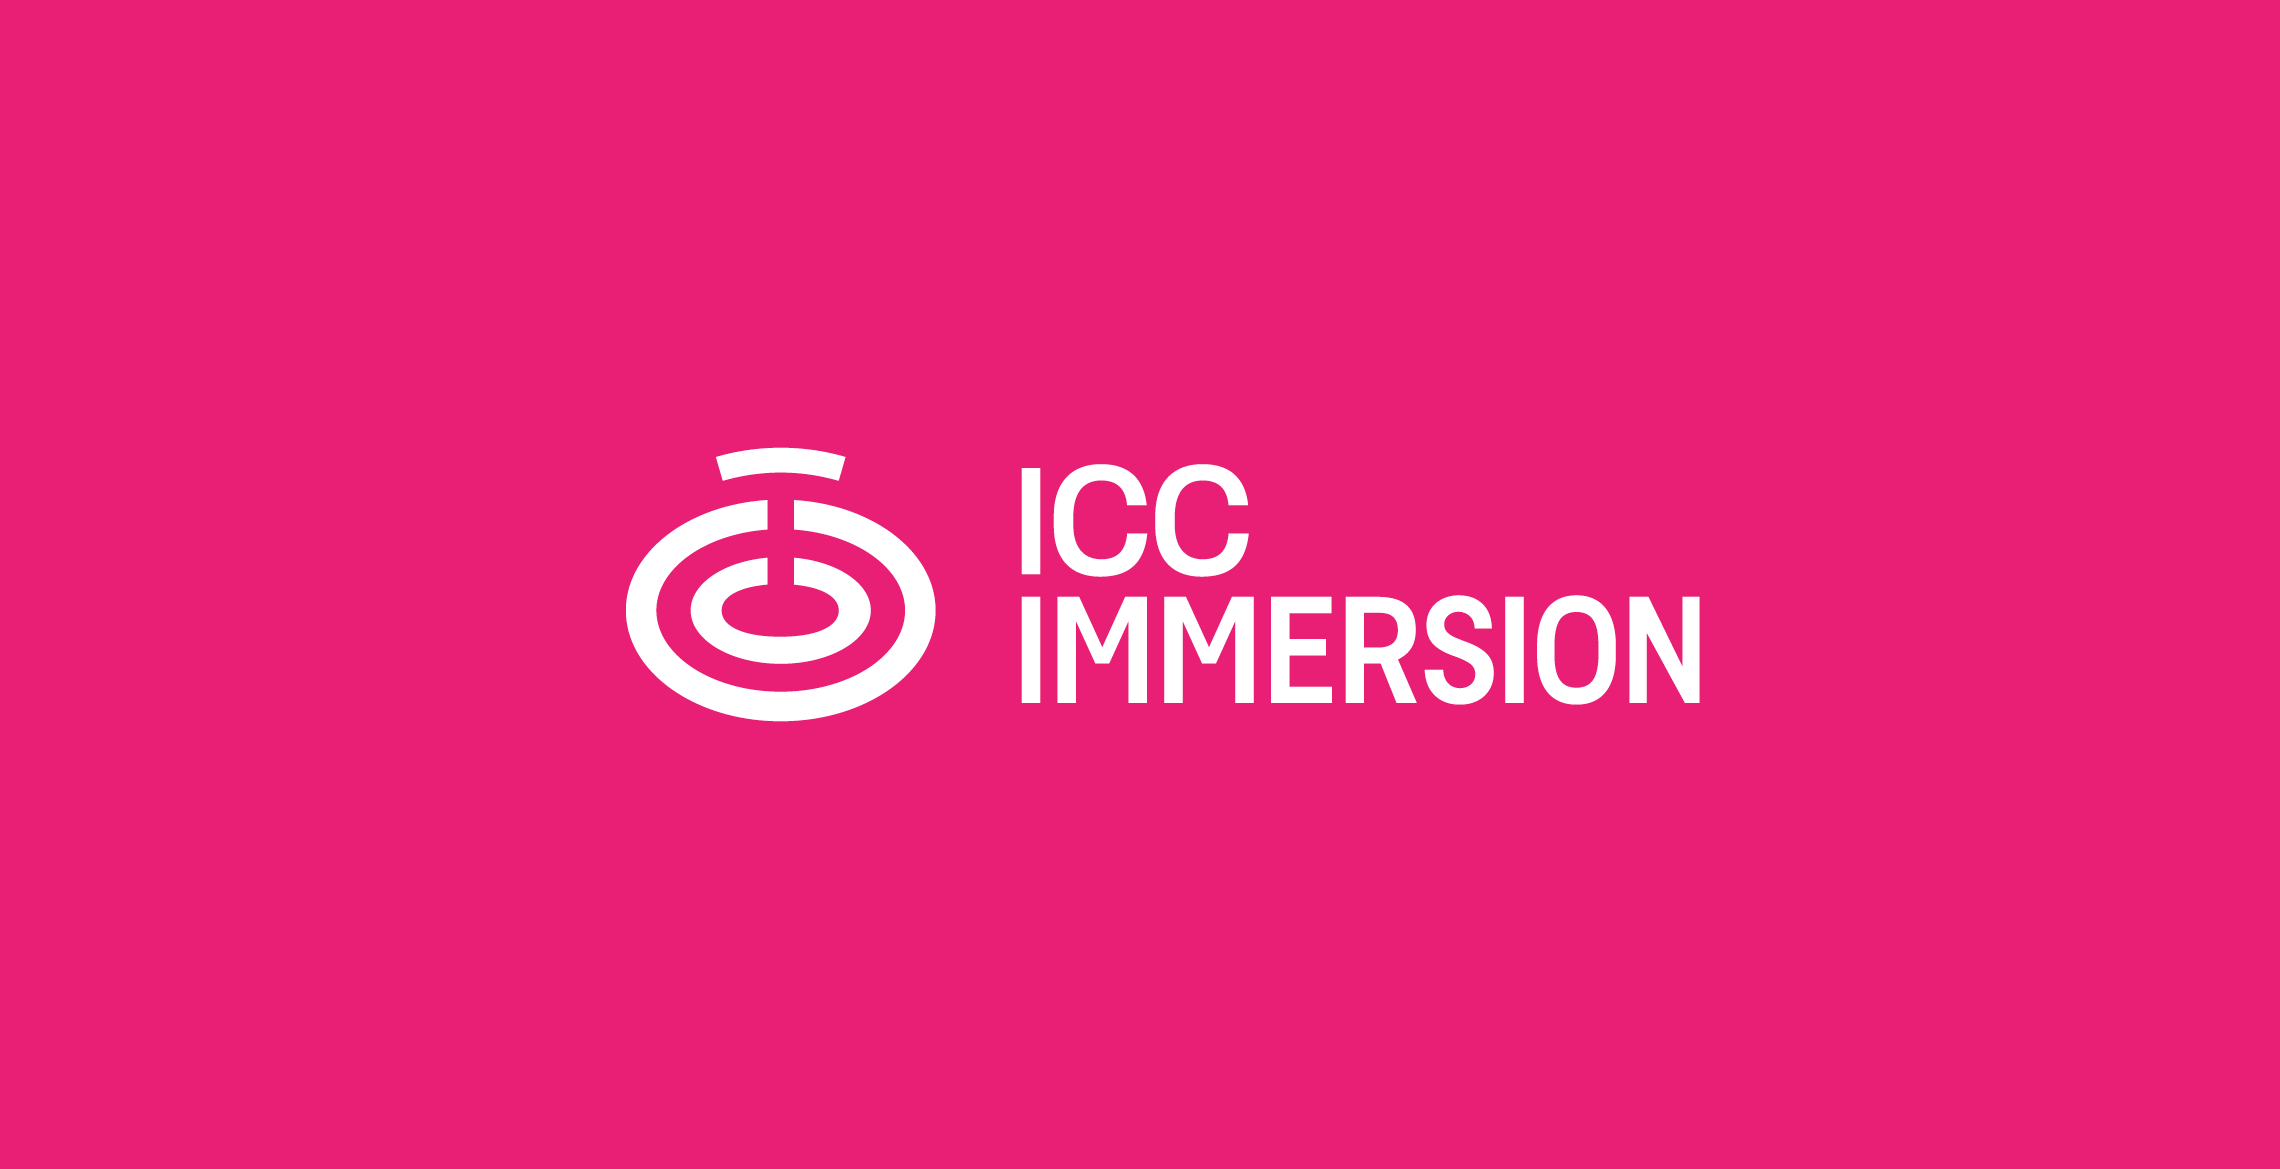 ICC_Immersion_Brand_identity_1